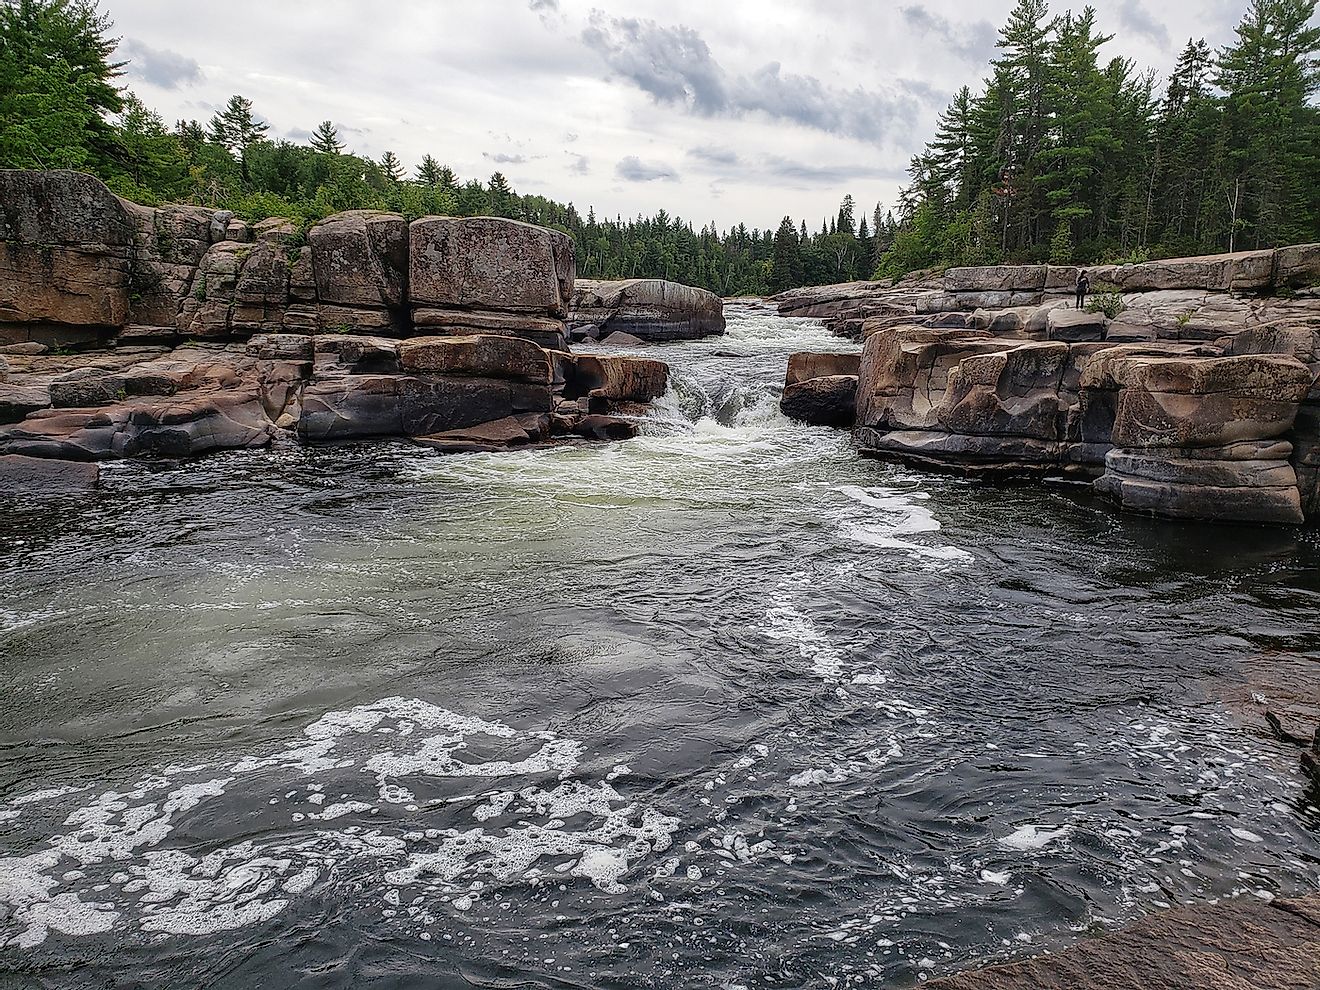 Rushing water at Pabineau Falls, New Brunswick. Image credit: Danhusseyphoto/Shutterstock.com